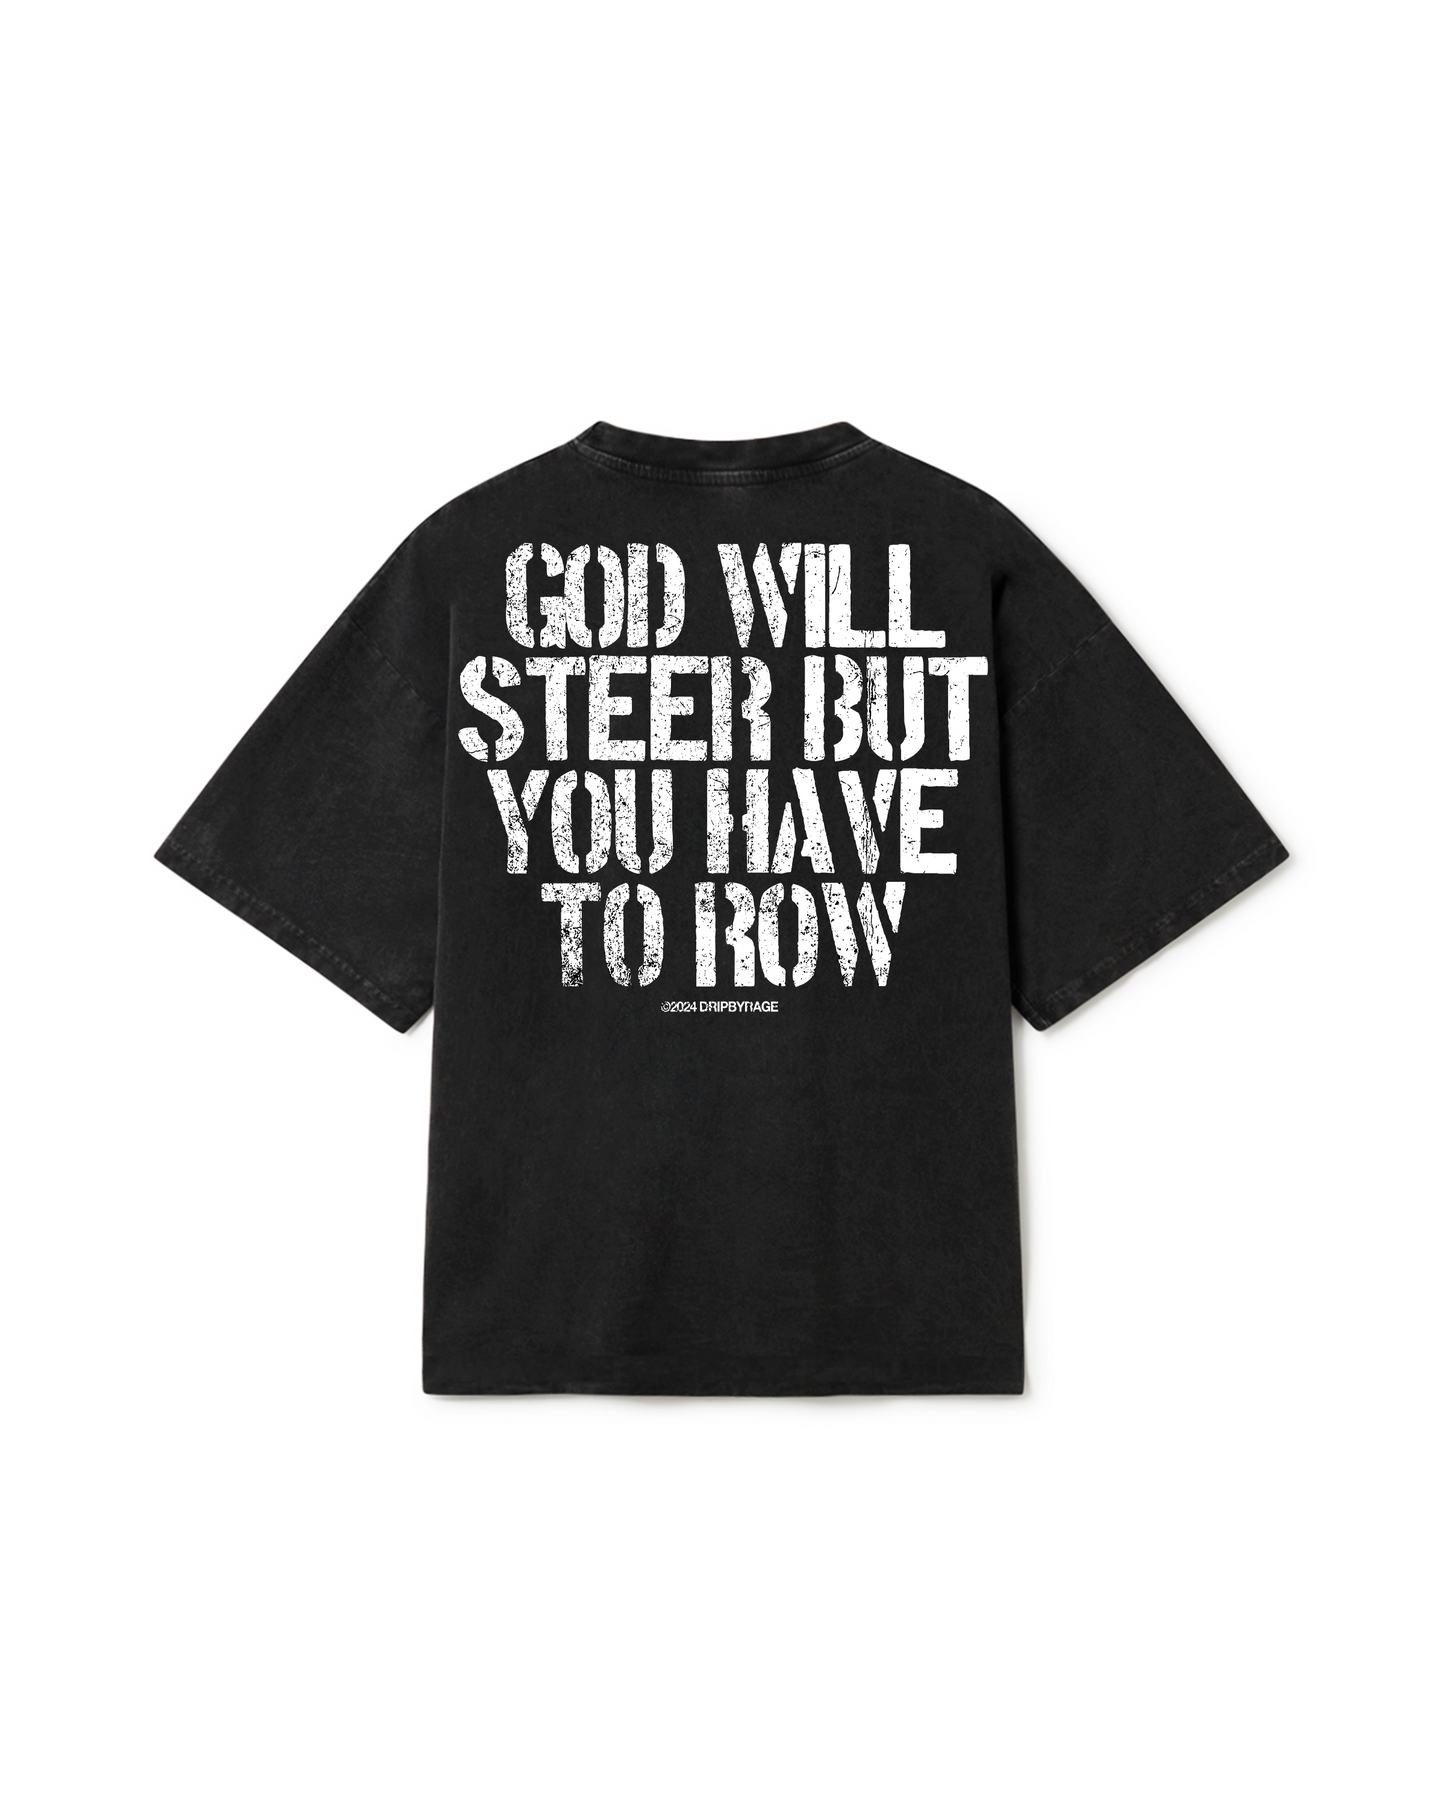 GOD WILL STEER OVERSIZED FADED T-SHIRT